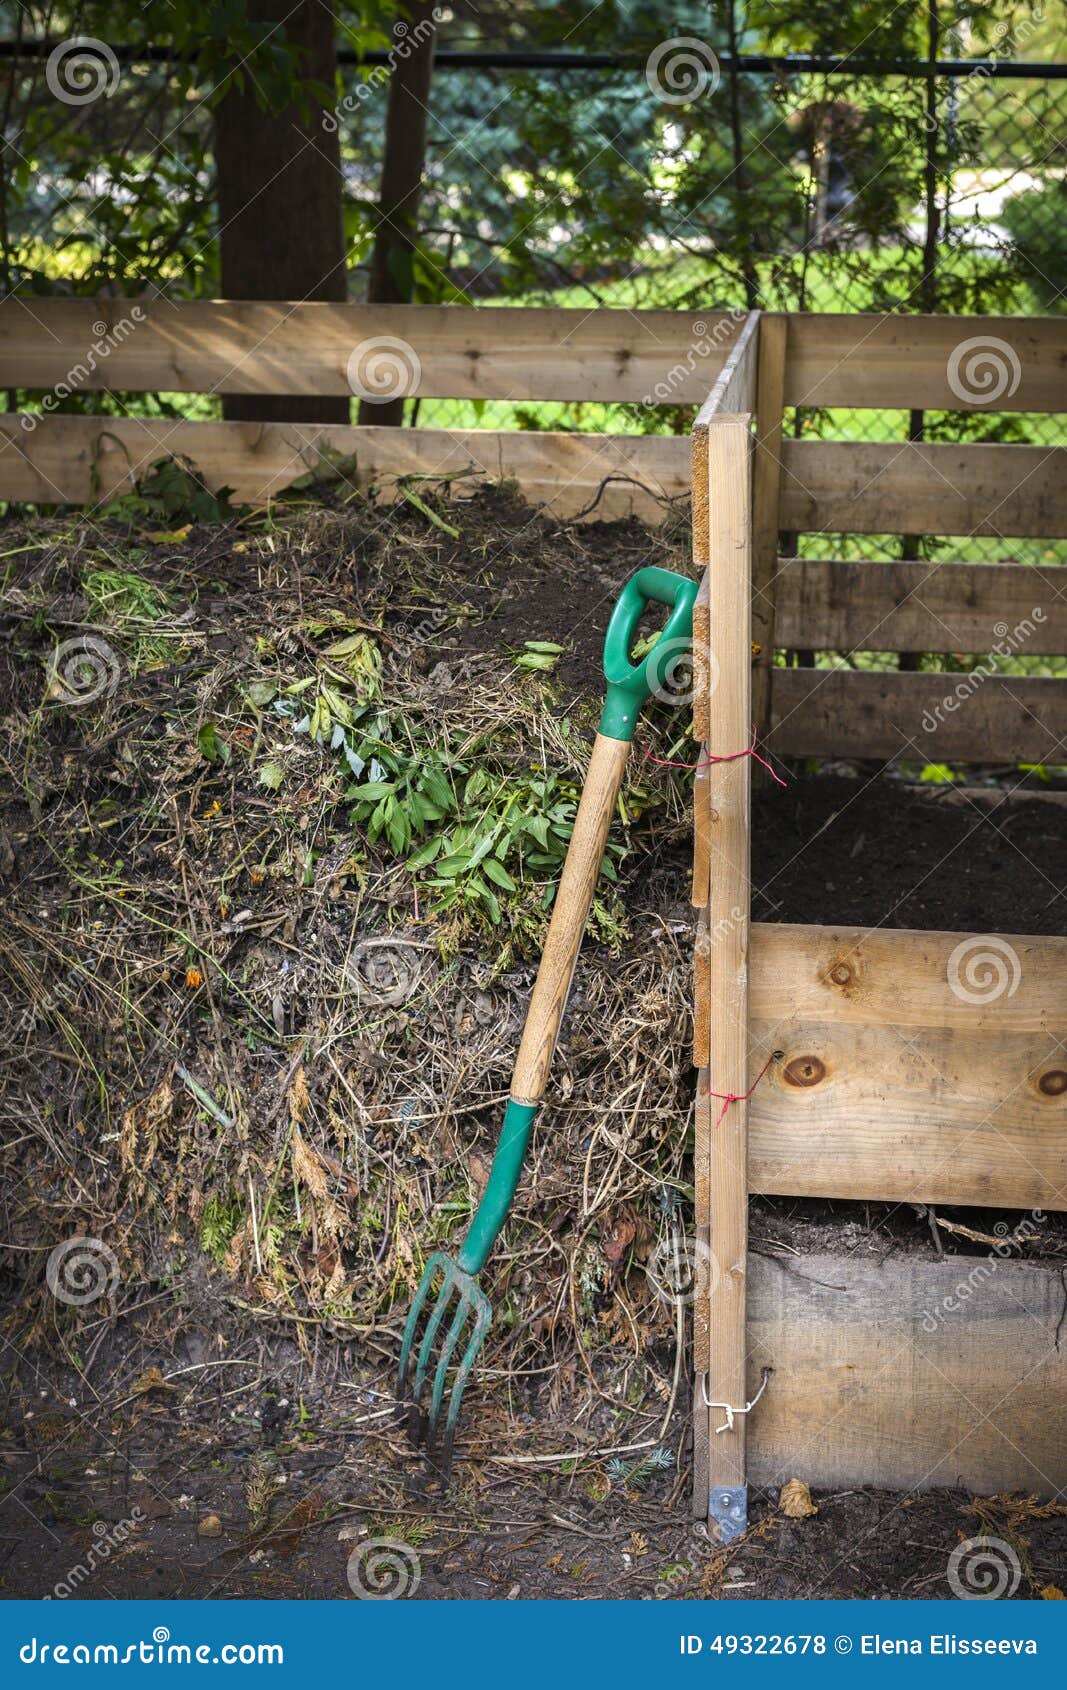 Backyard Compost Bins Stock Photo - Image: 49322678